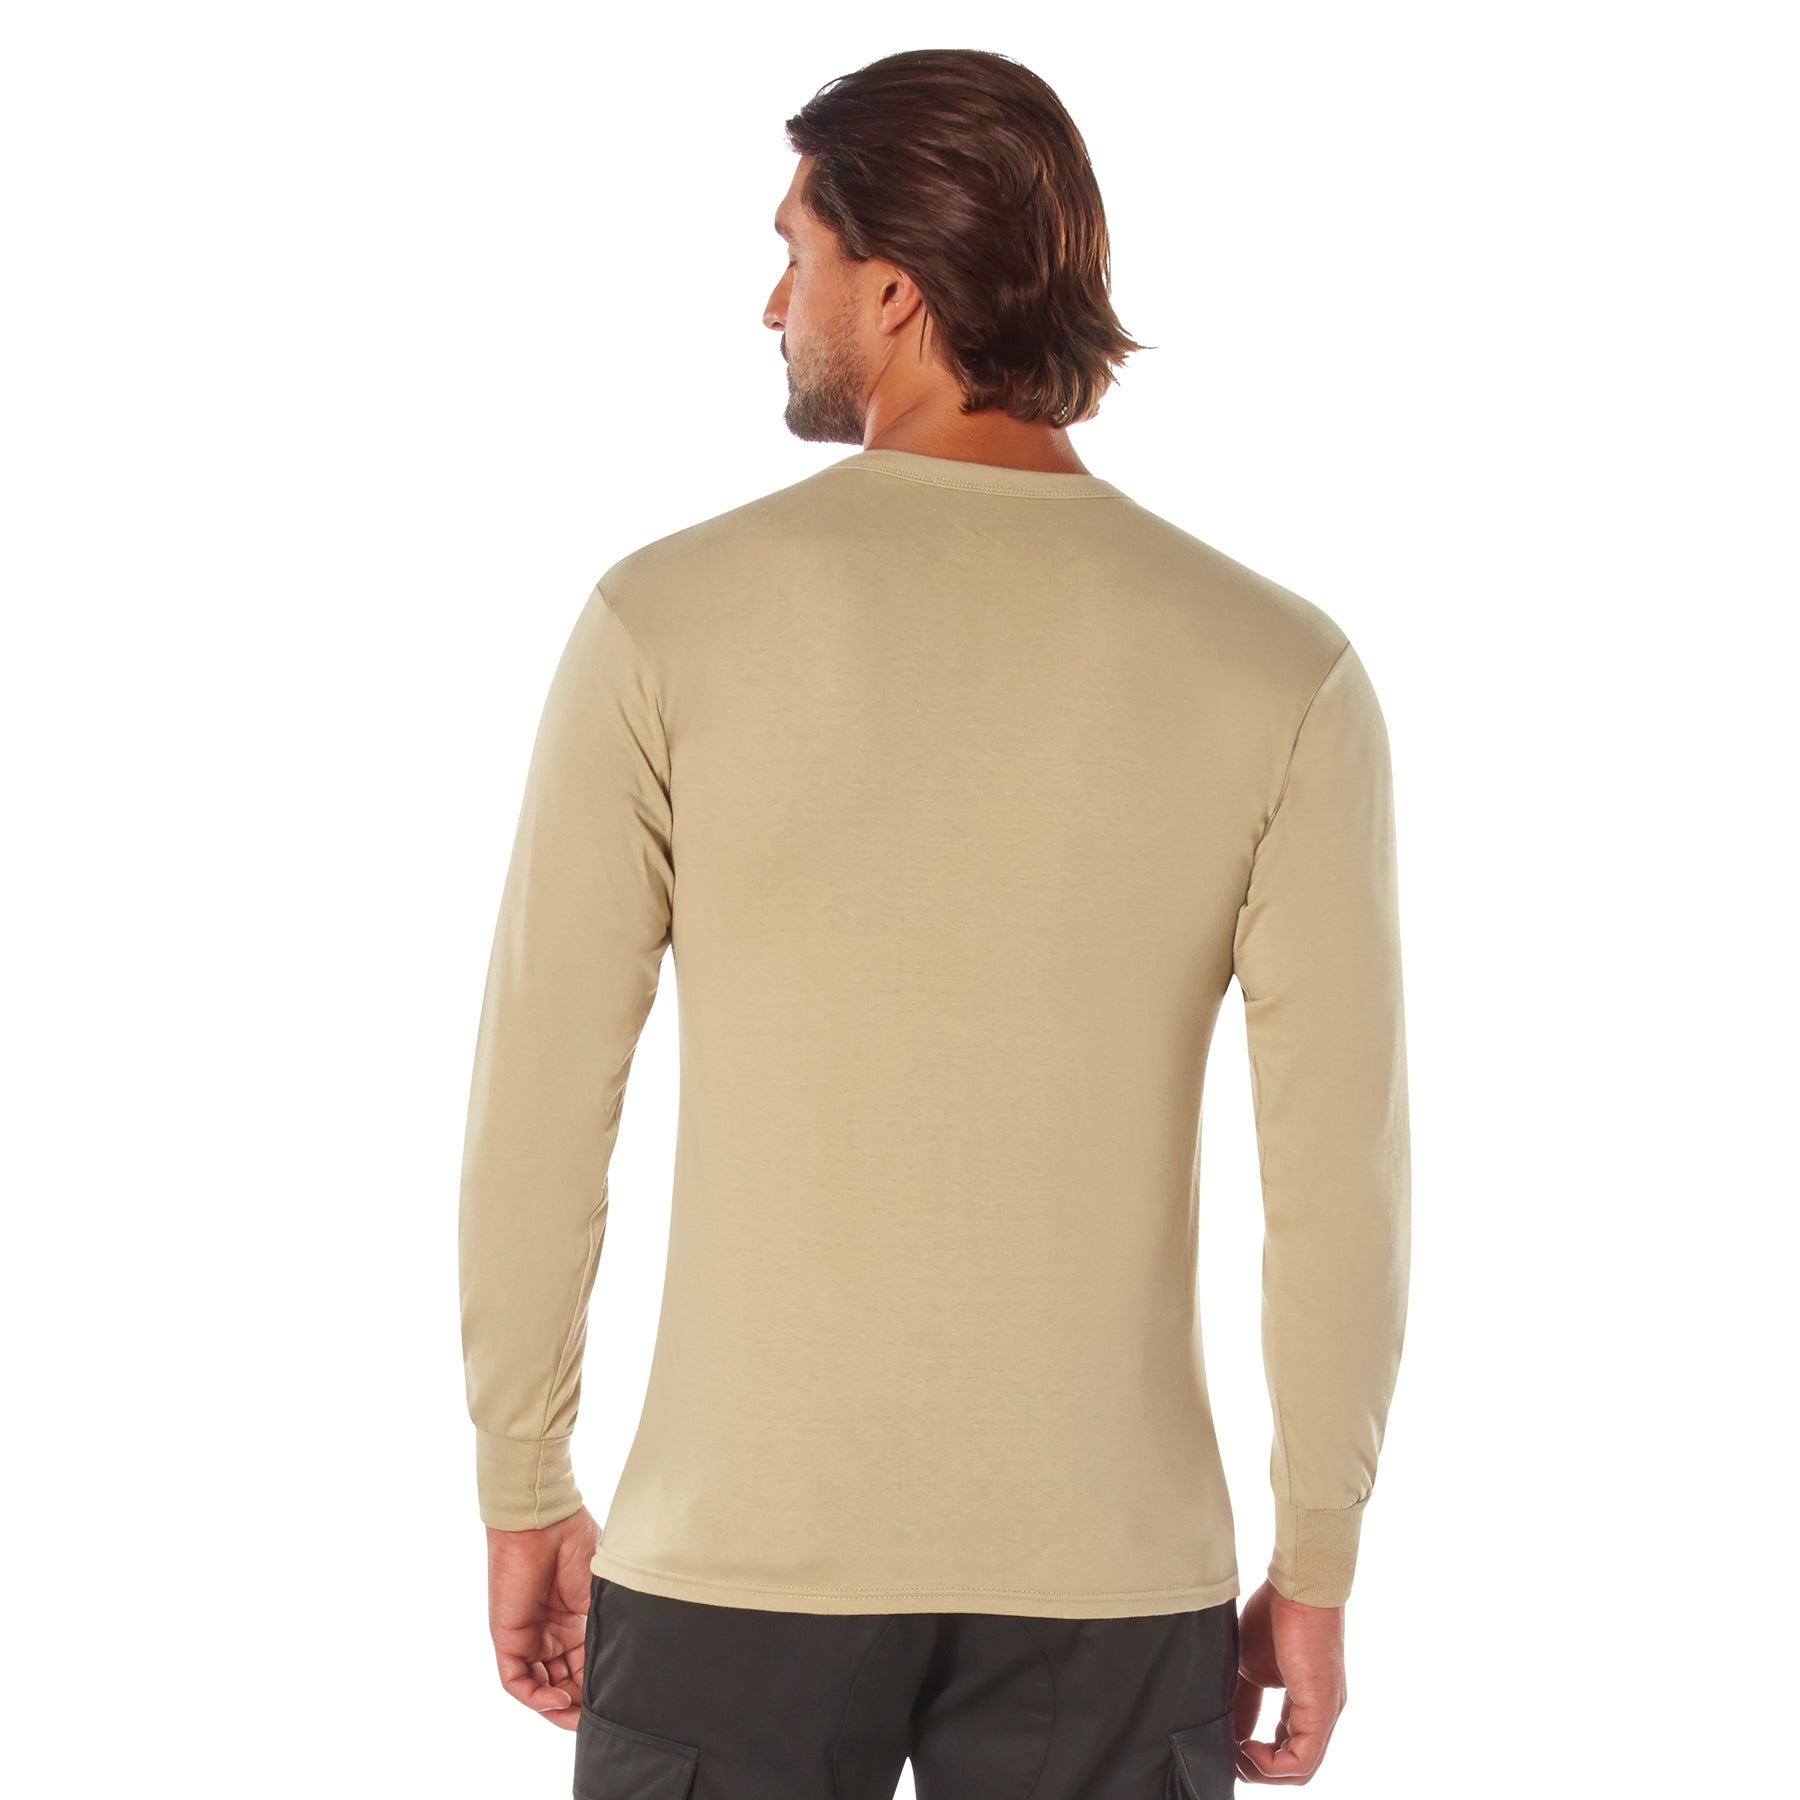 [Military] Cotton Long Sleeve Shirts